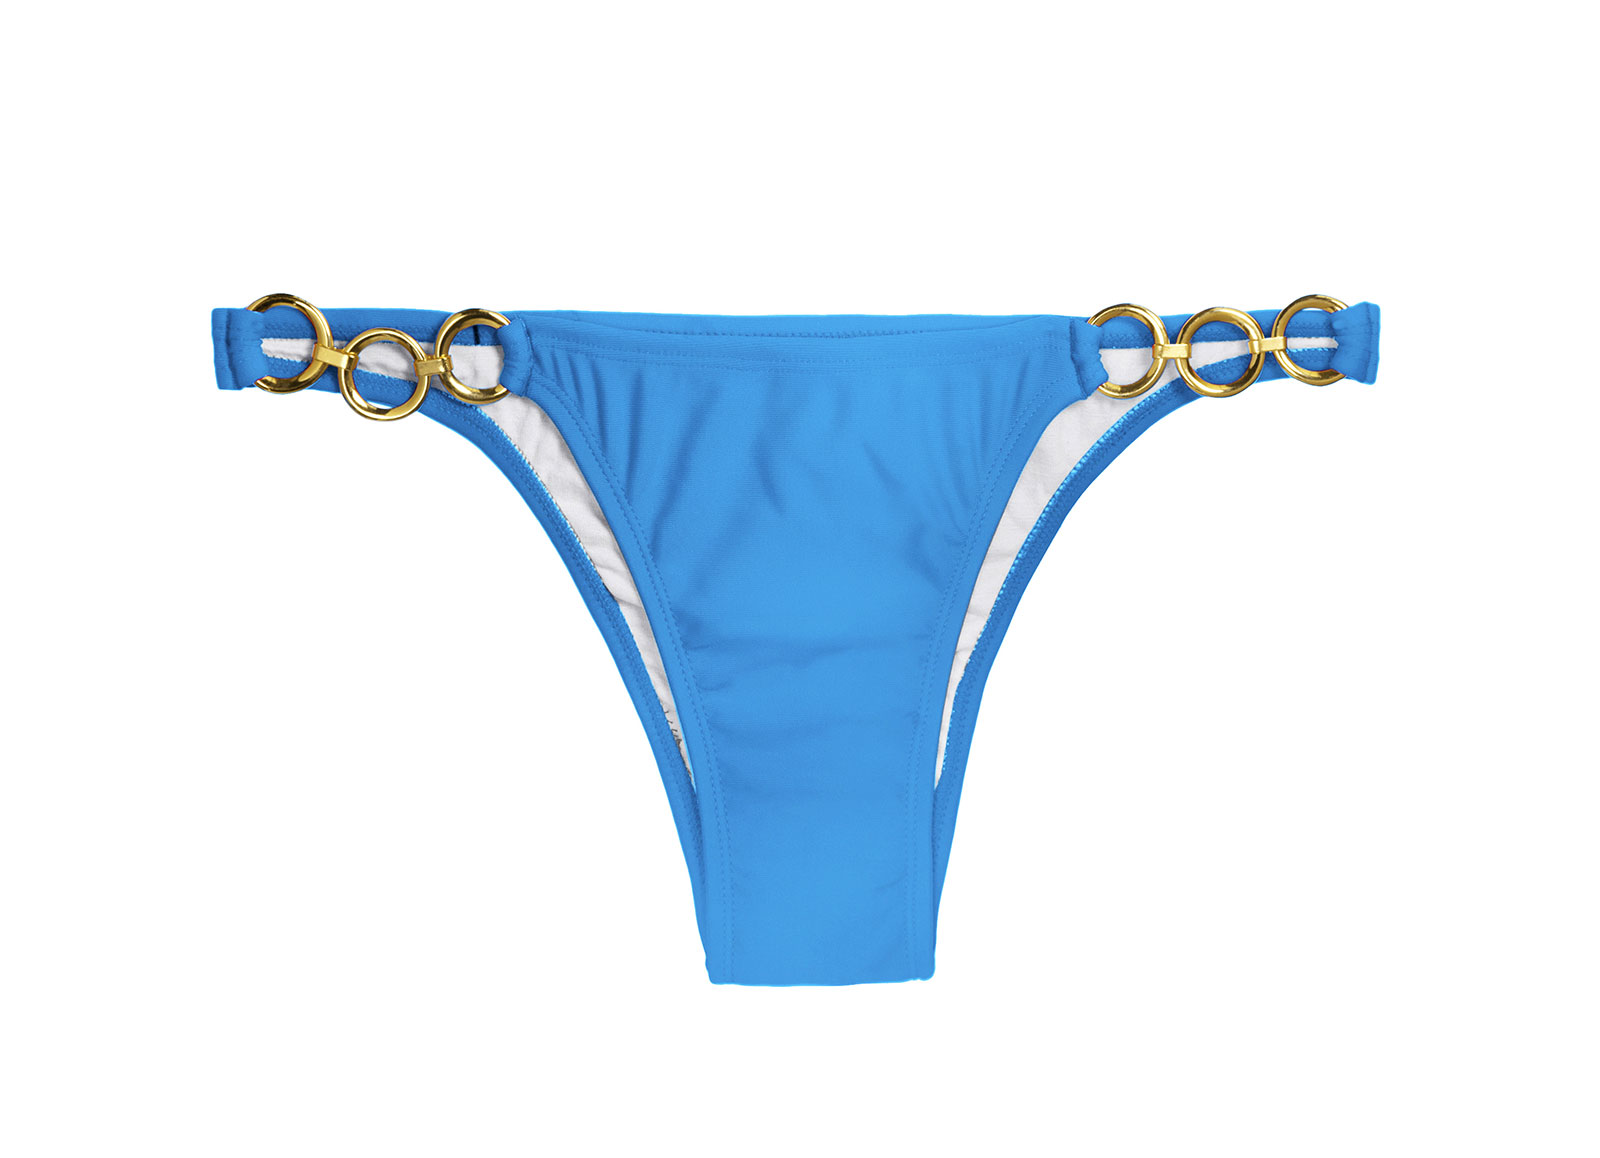 Bikini Bottoms Blue Swimsuit Bottom With Rings - Blue Trio